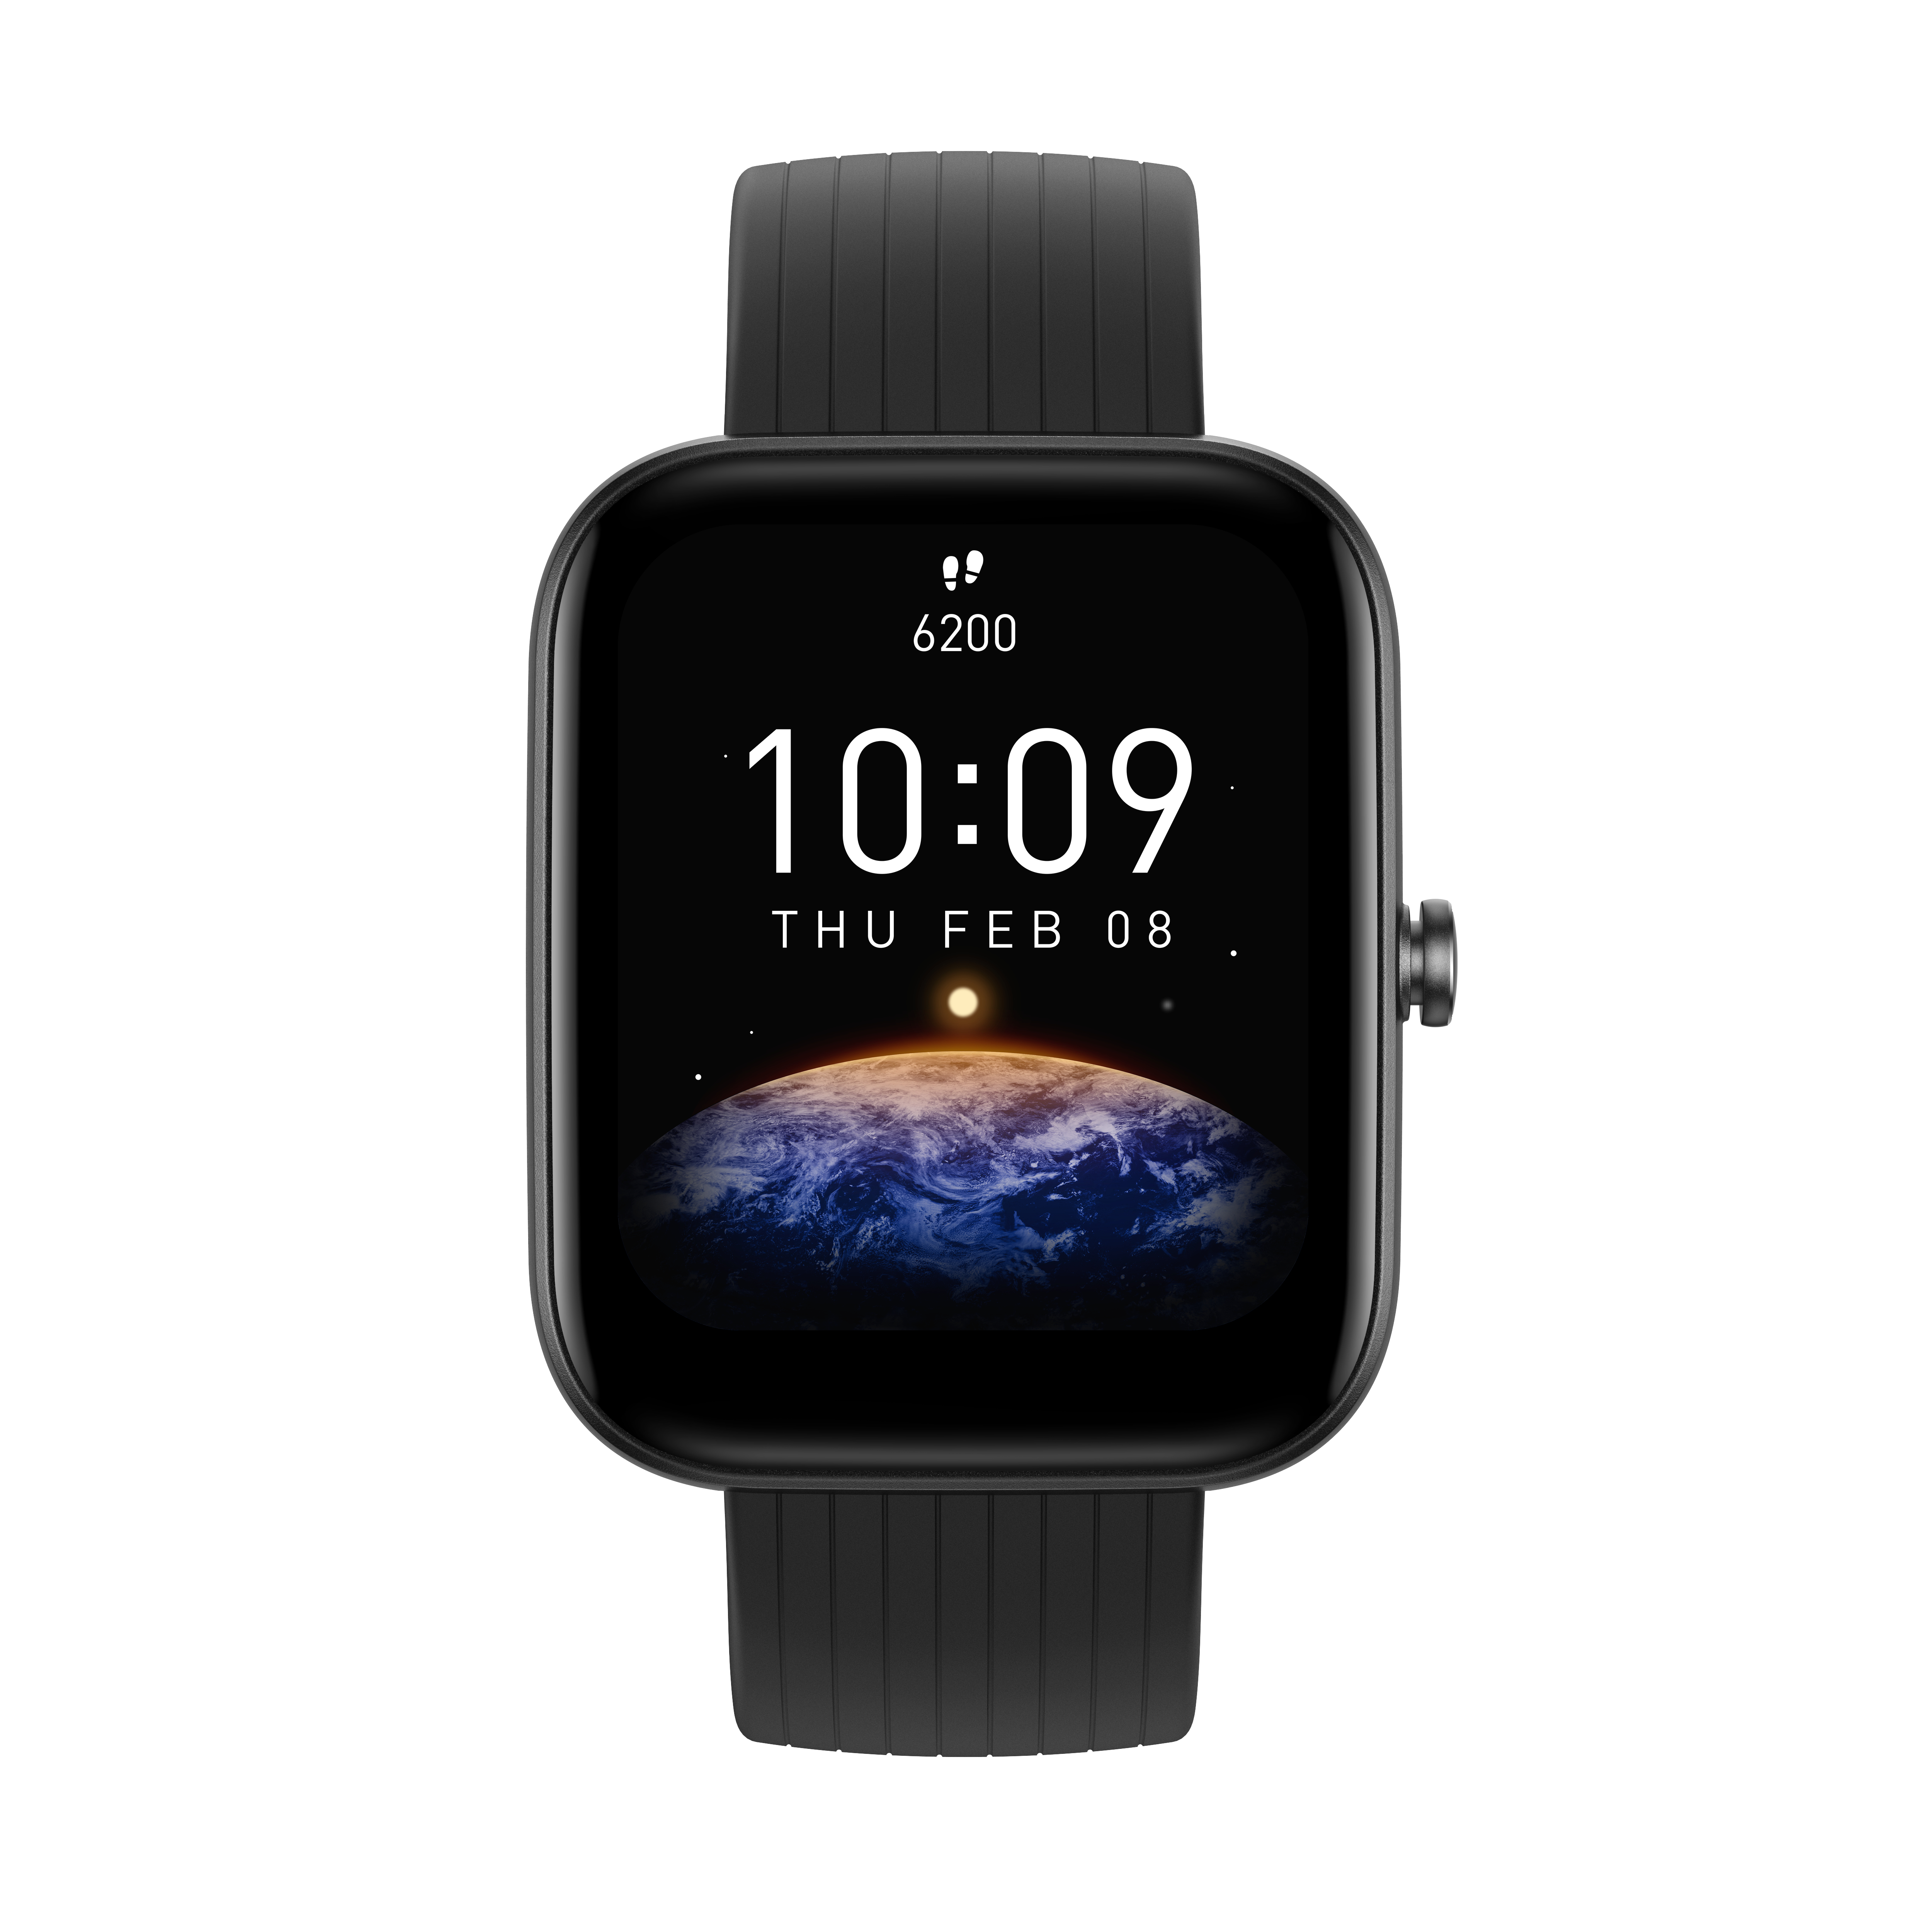 Amazfit - Pulsera reloj deportiva amazfit bip 3 pro black 1.69pulgadas -  smartwatch